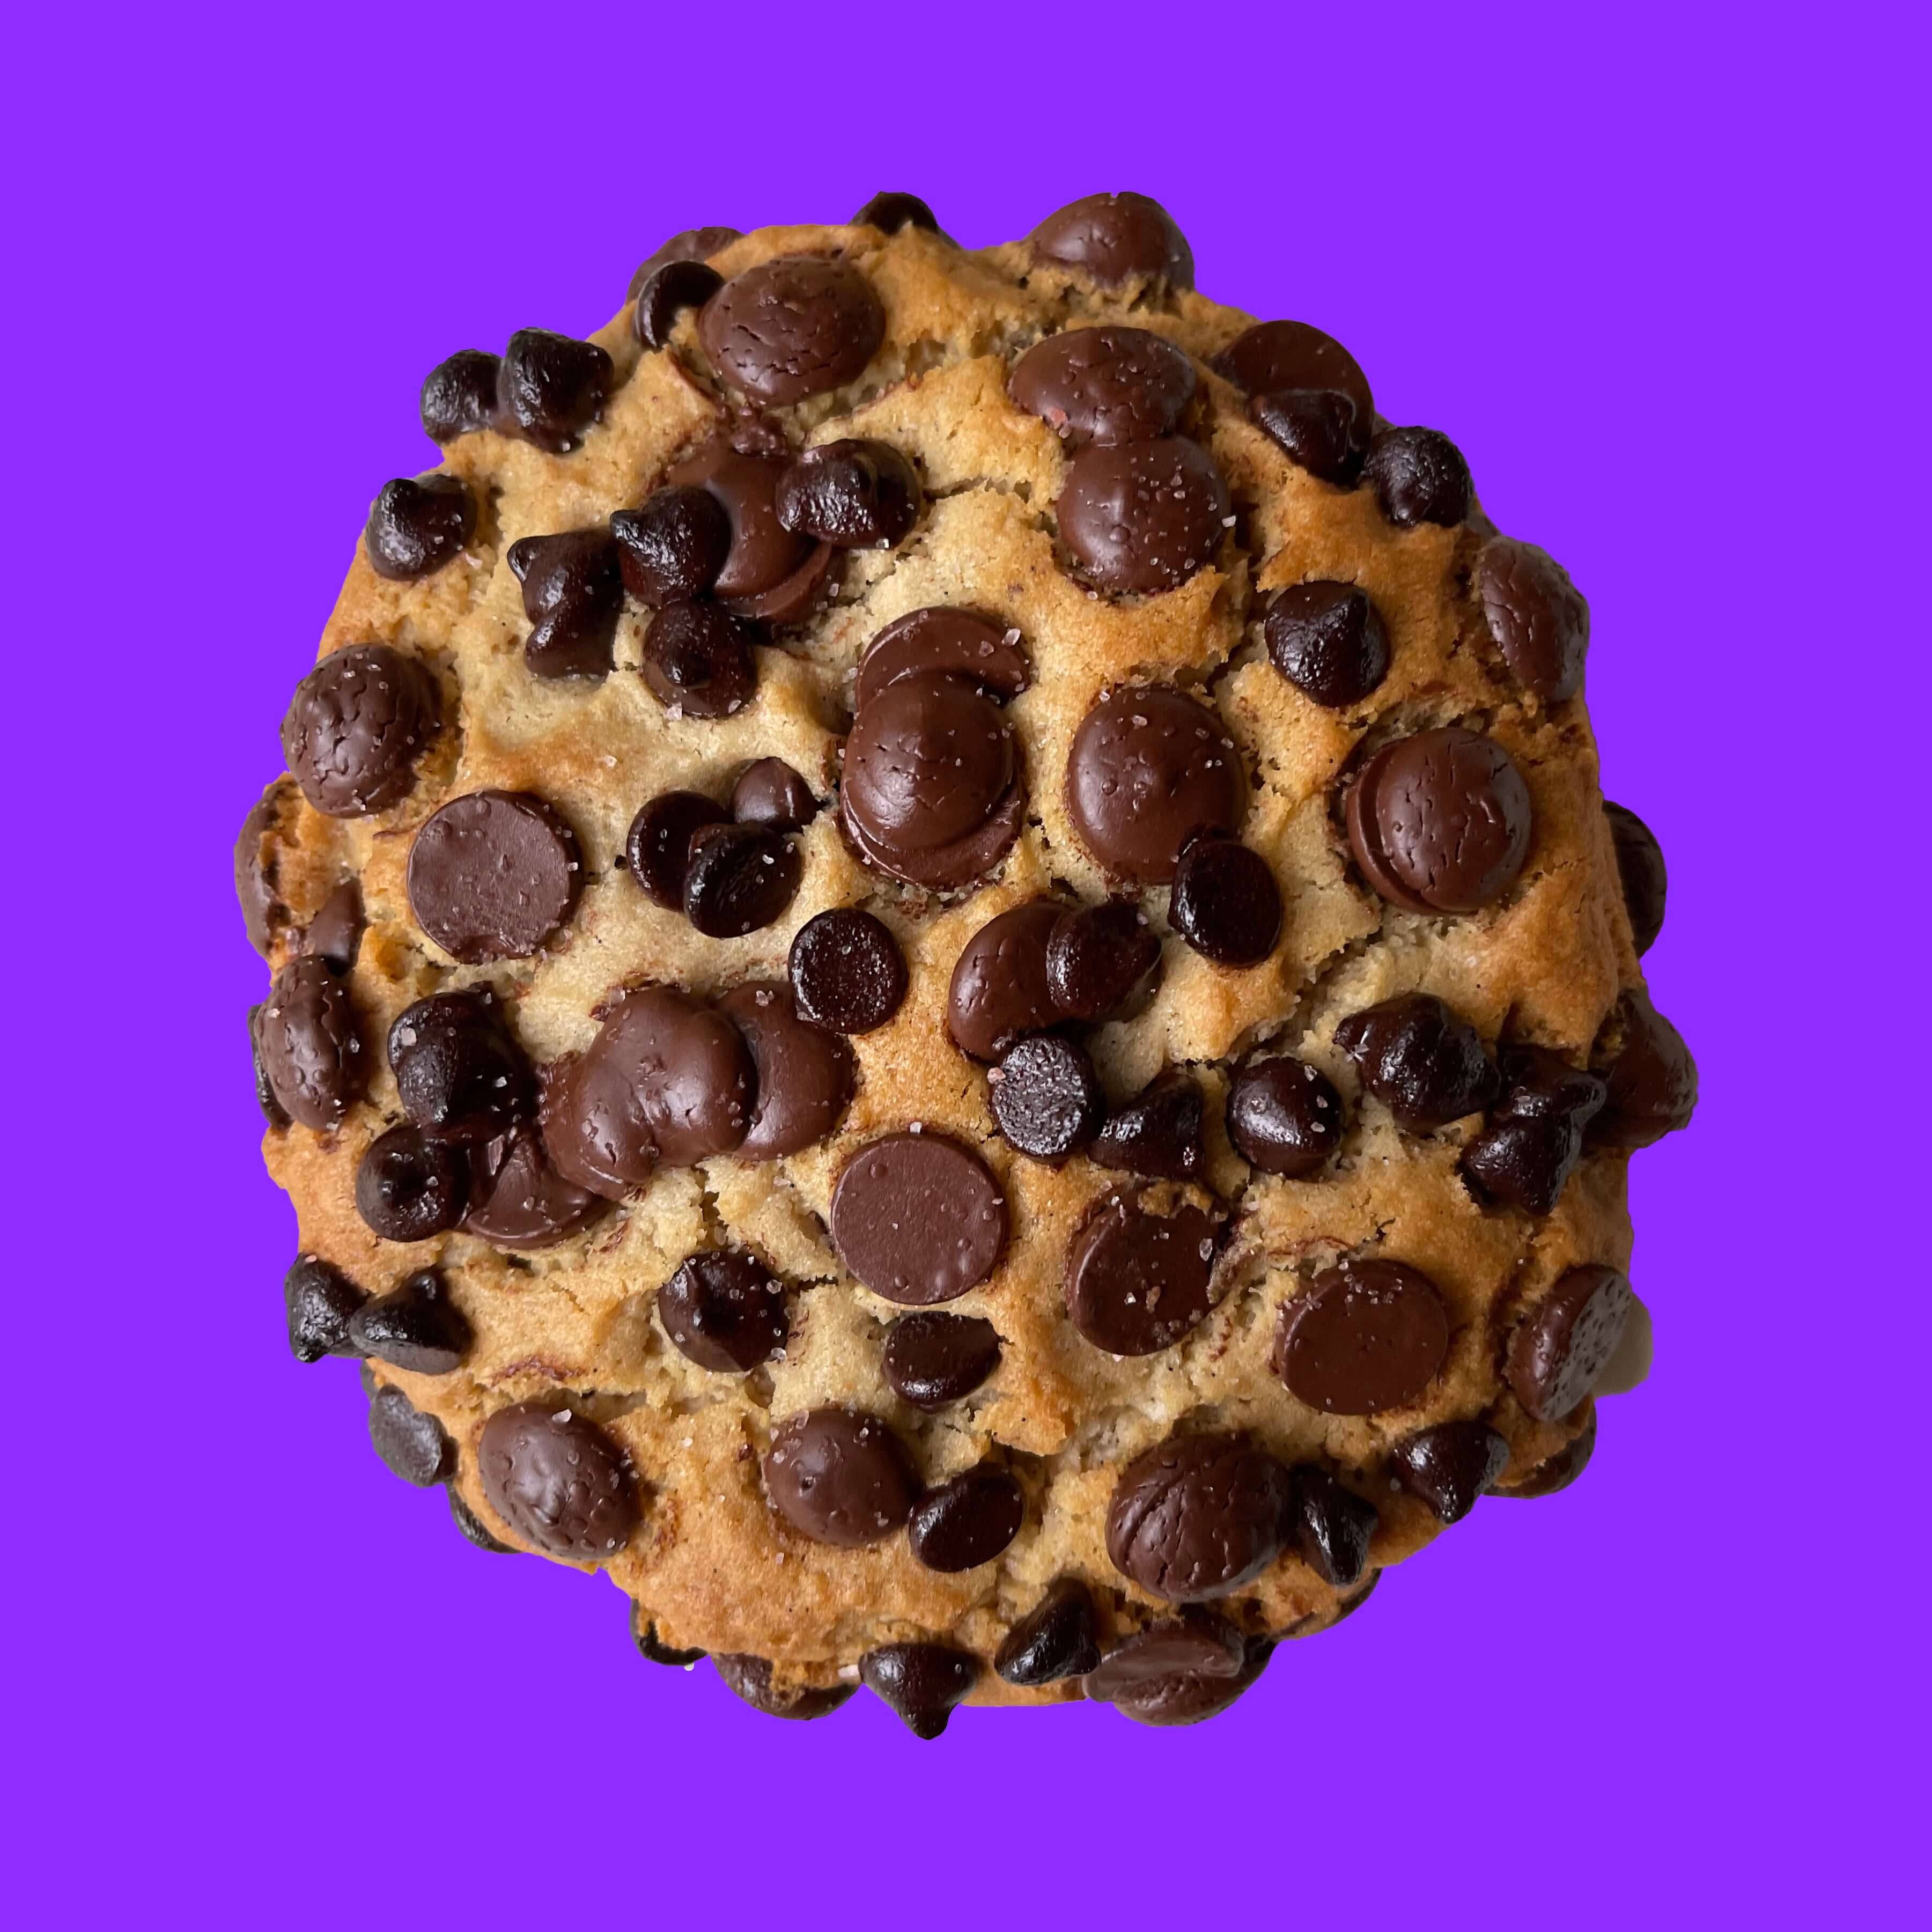 Vegan M&M Cookie Mix in a Jar - Crumbs & Caramel